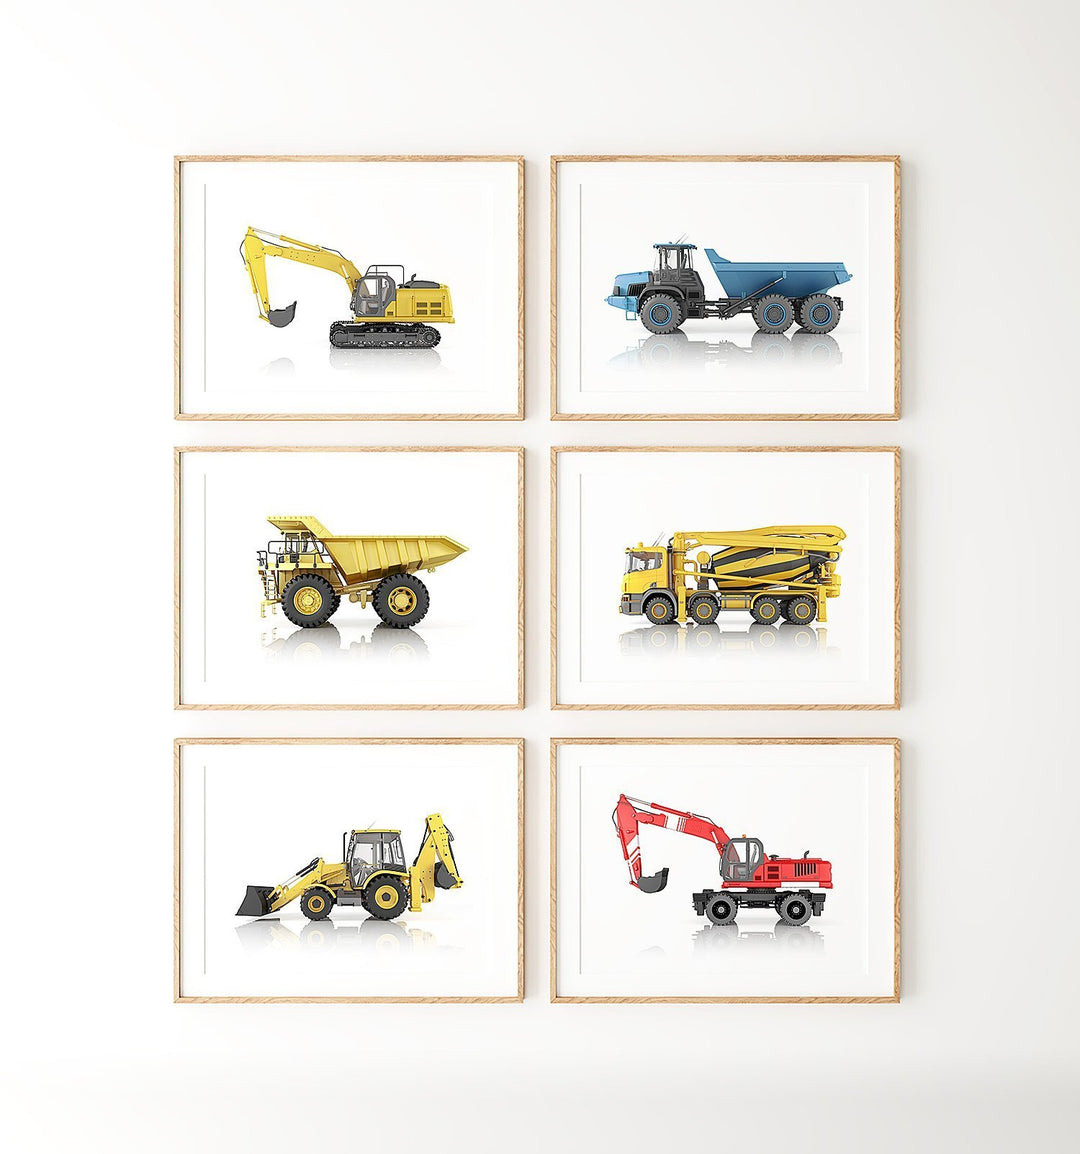 Construction Vehicles Prints - Set of 6 - The Crown Prints